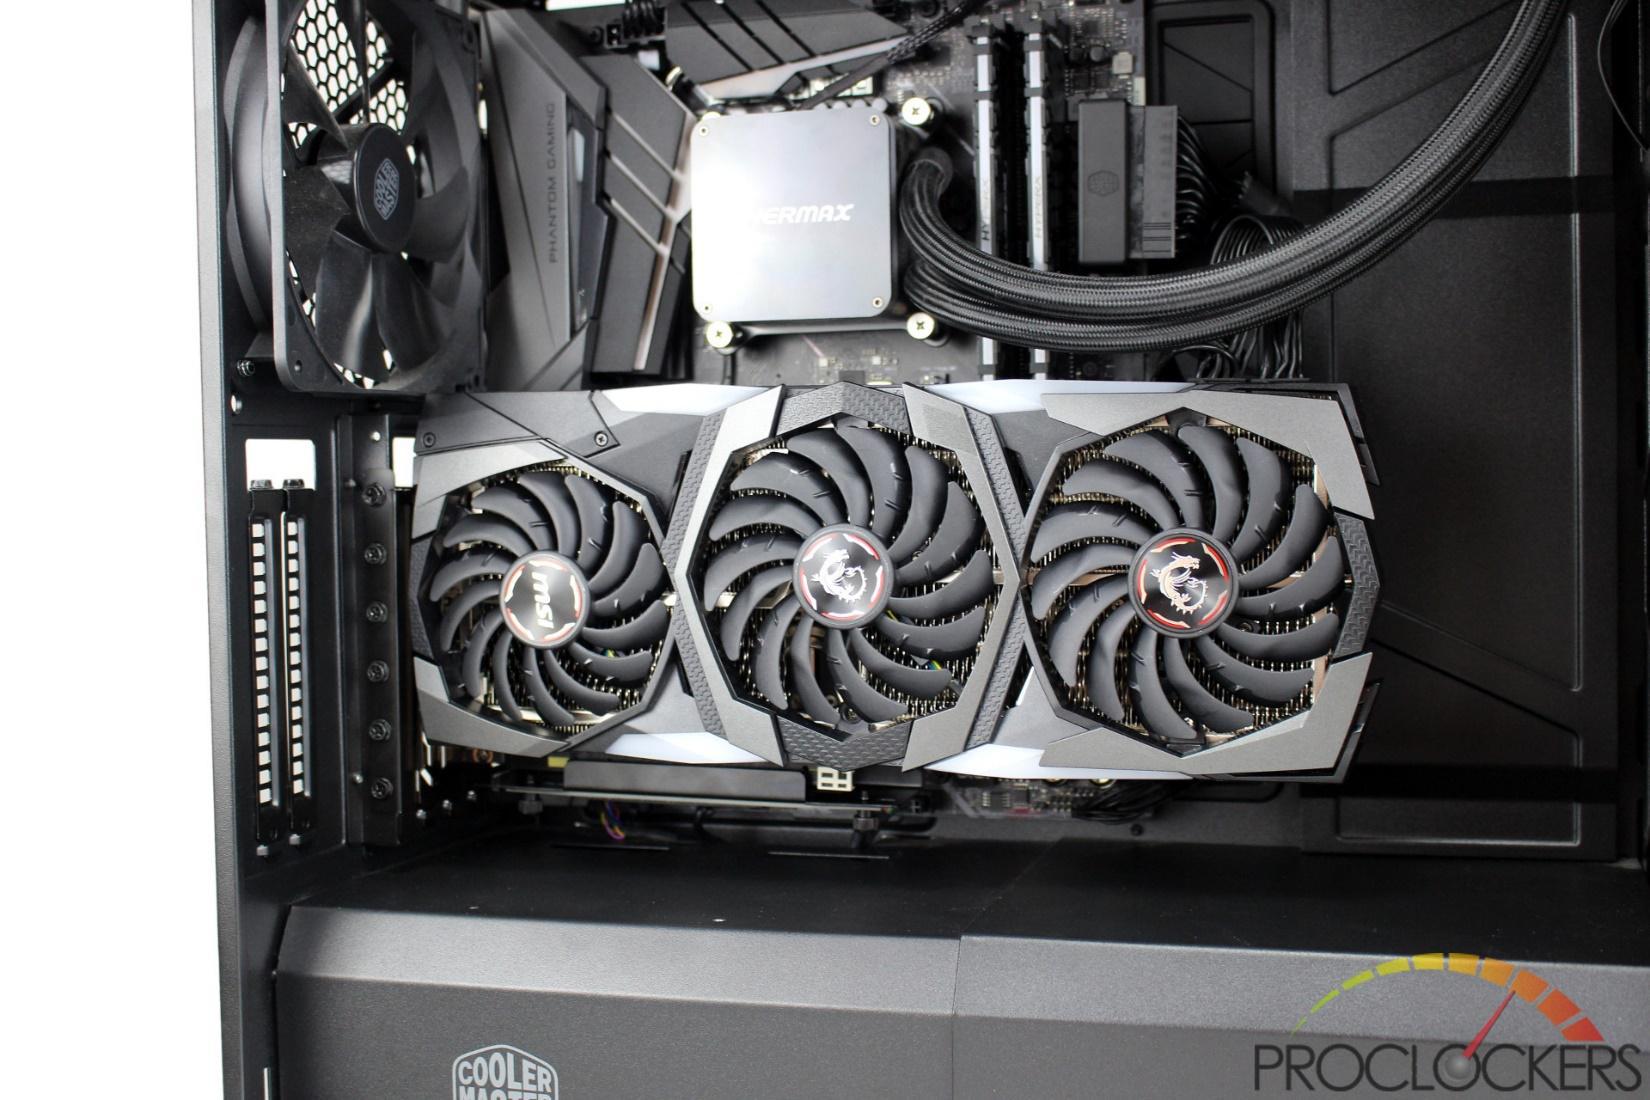 mønster Armstrong bygning Li-Heat GPU Vertical Mounting Bracket Review | Gaming Gorilla